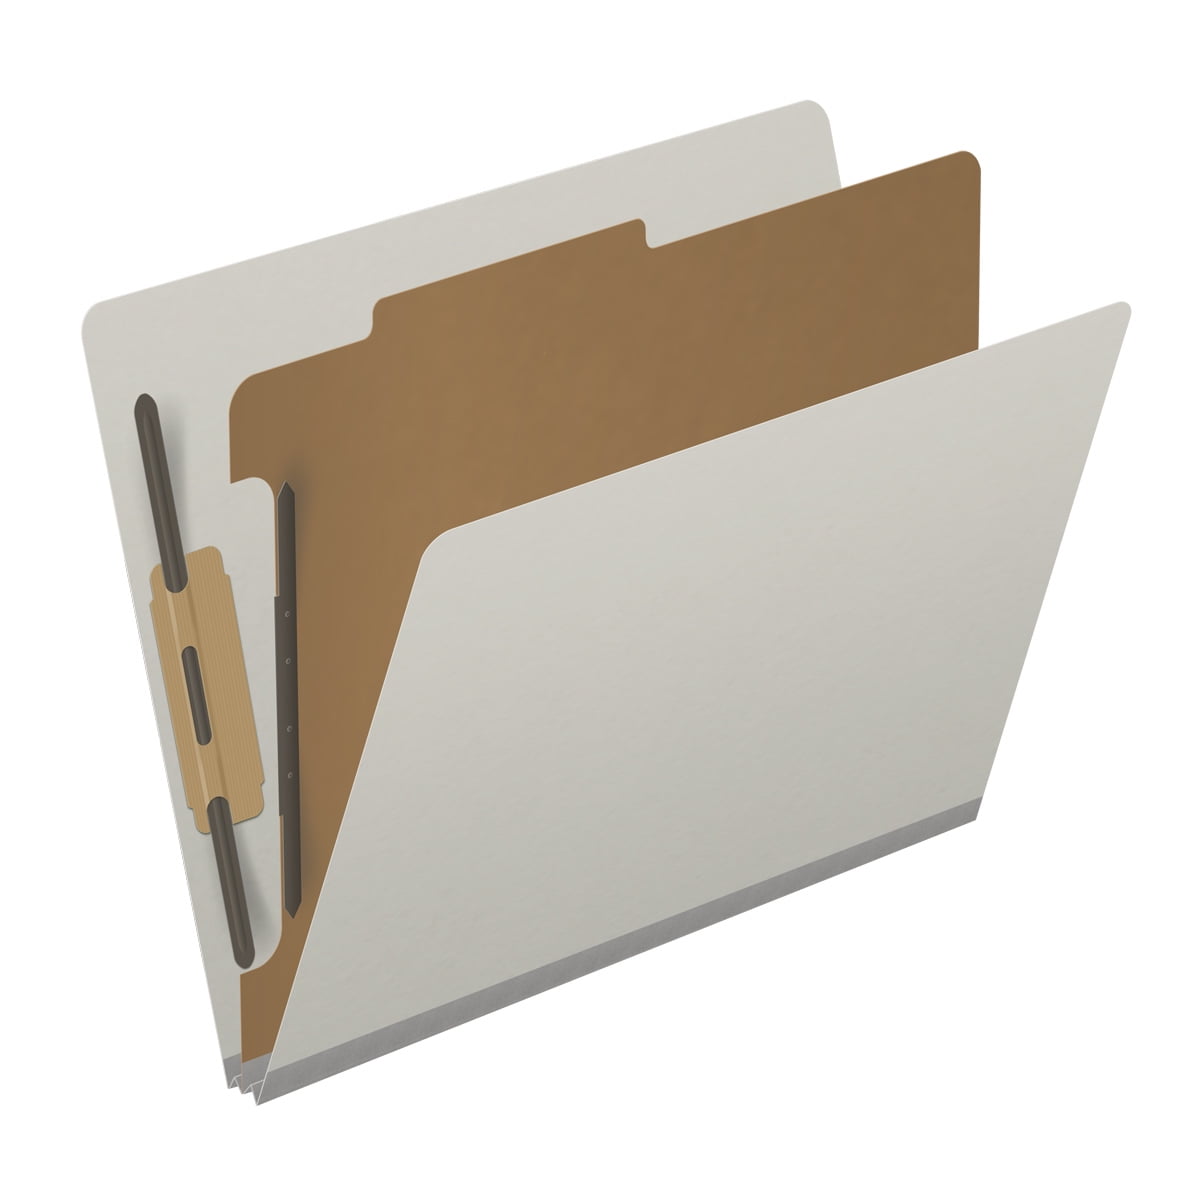 Box of 10 Full Cut End Tab Pale Green Letter Size 25 Pt Pressboard Classification Folders 1 Divider 